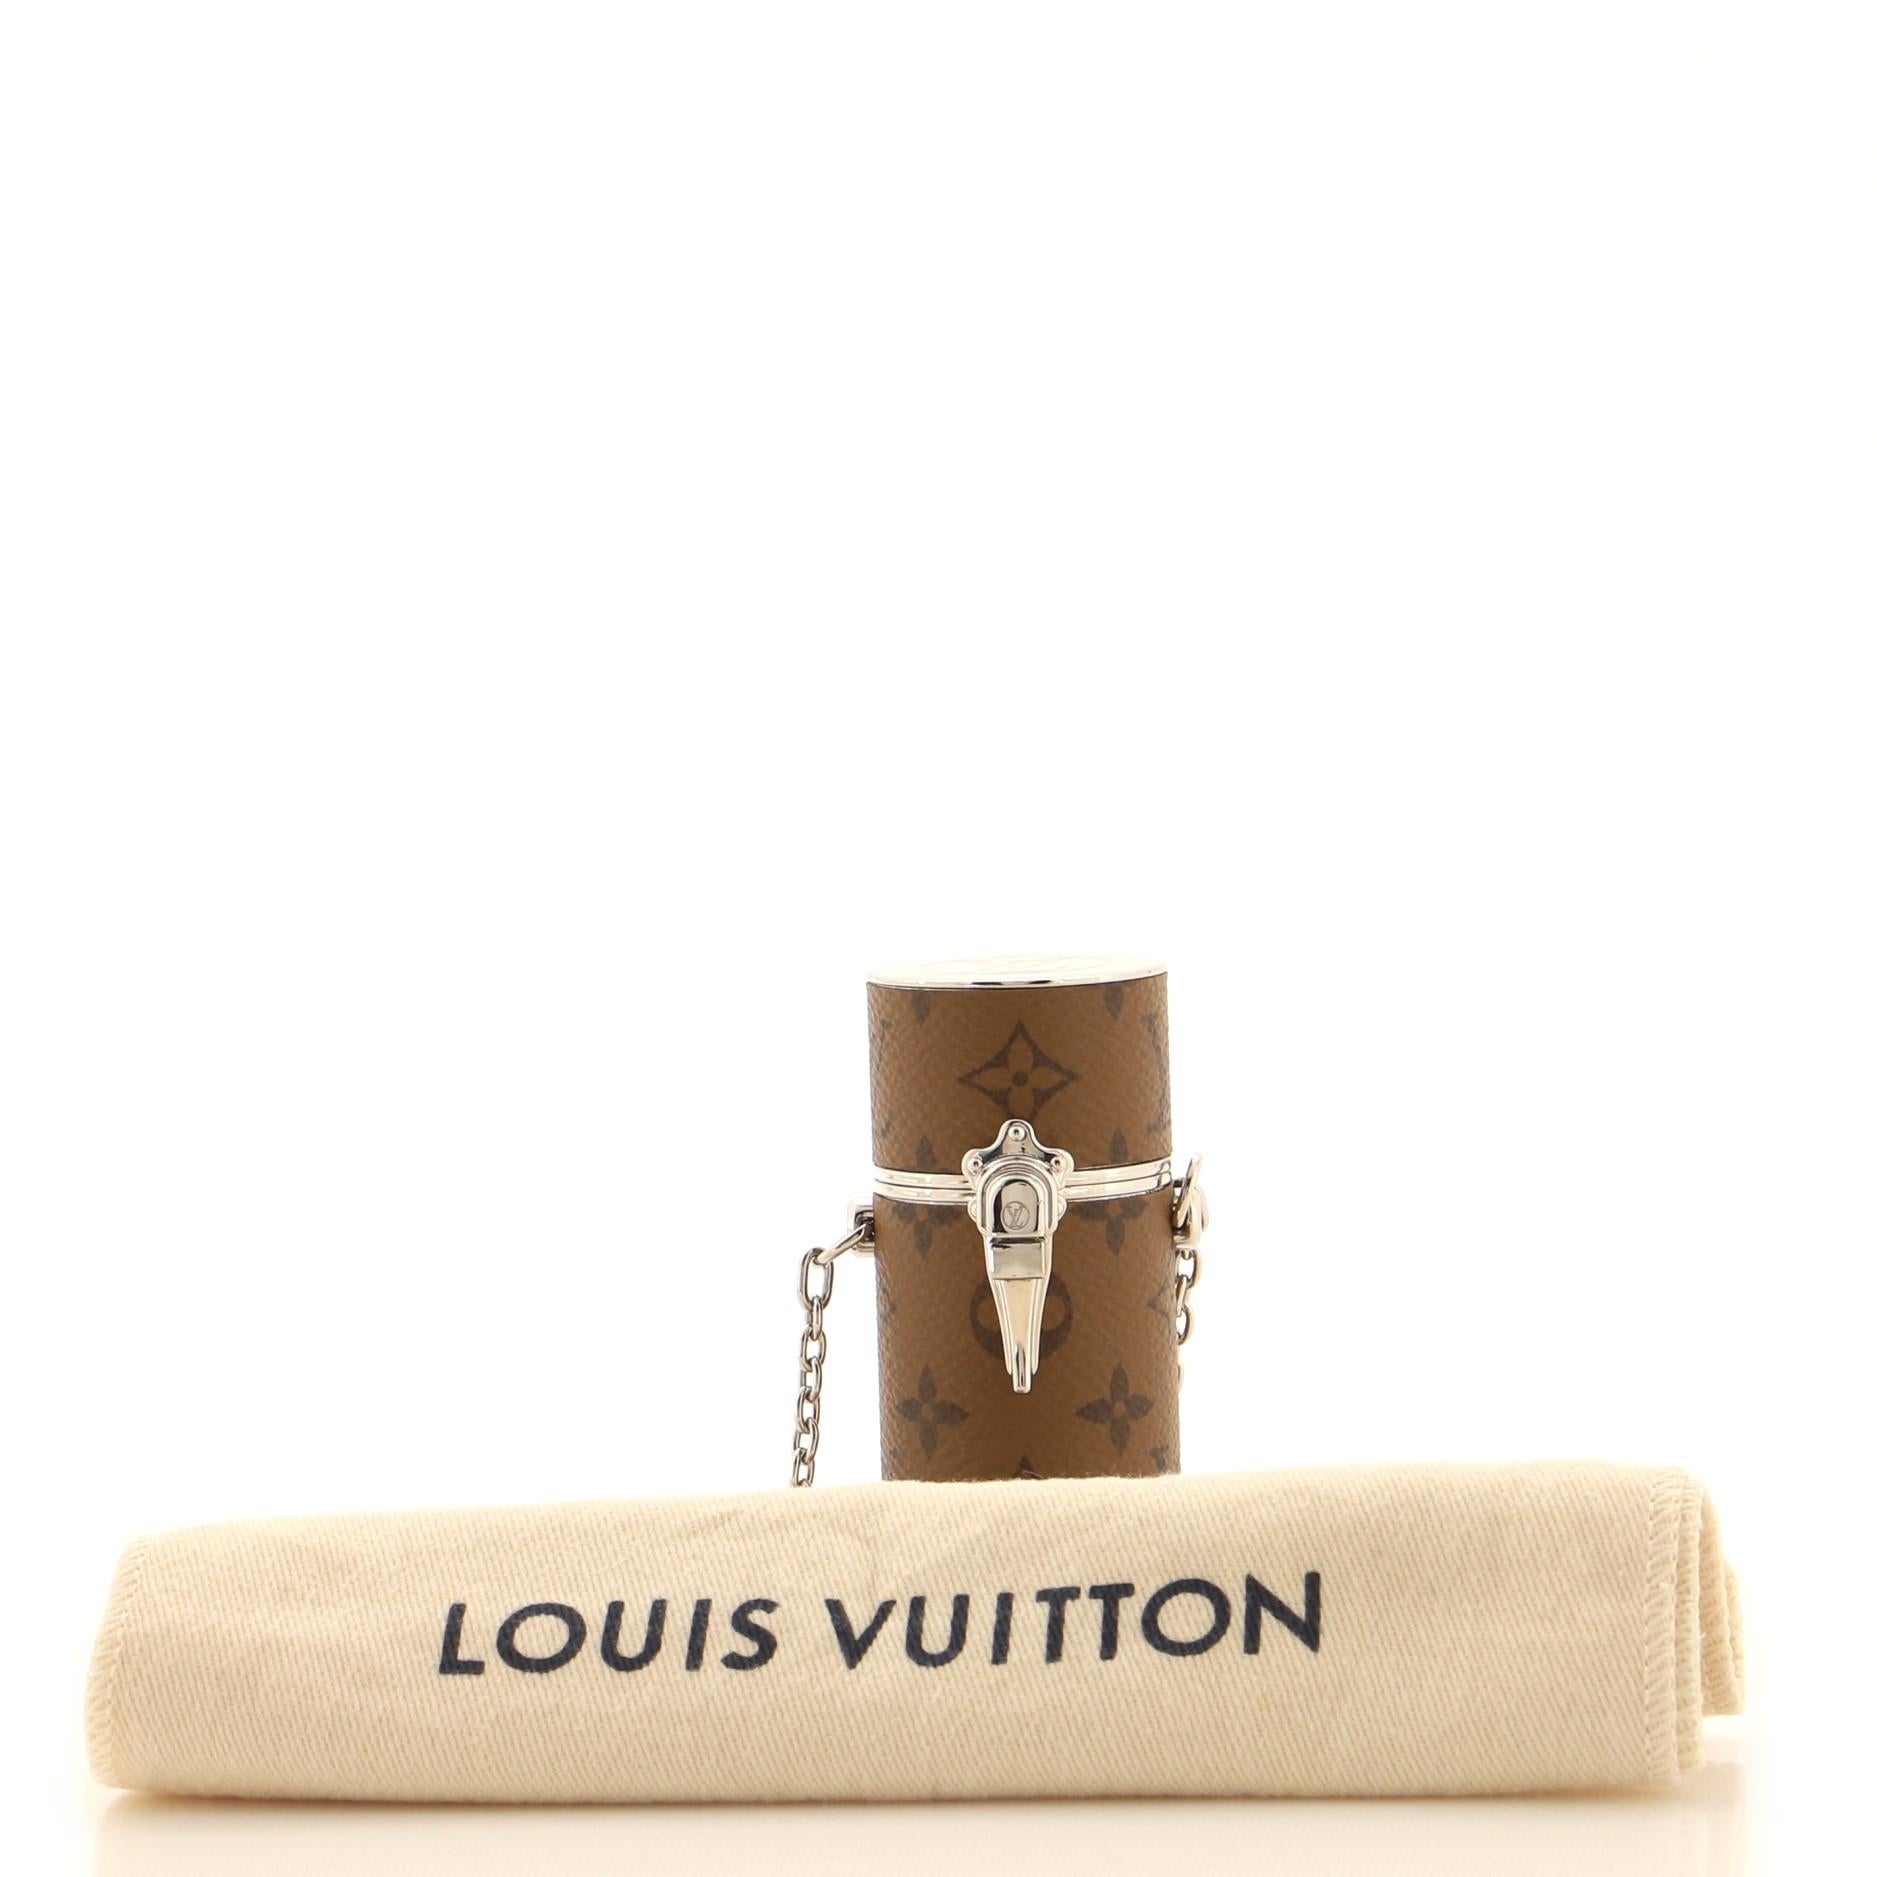 Louis Vuitton Lipstick Case - 2 For Sale on 1stDibs